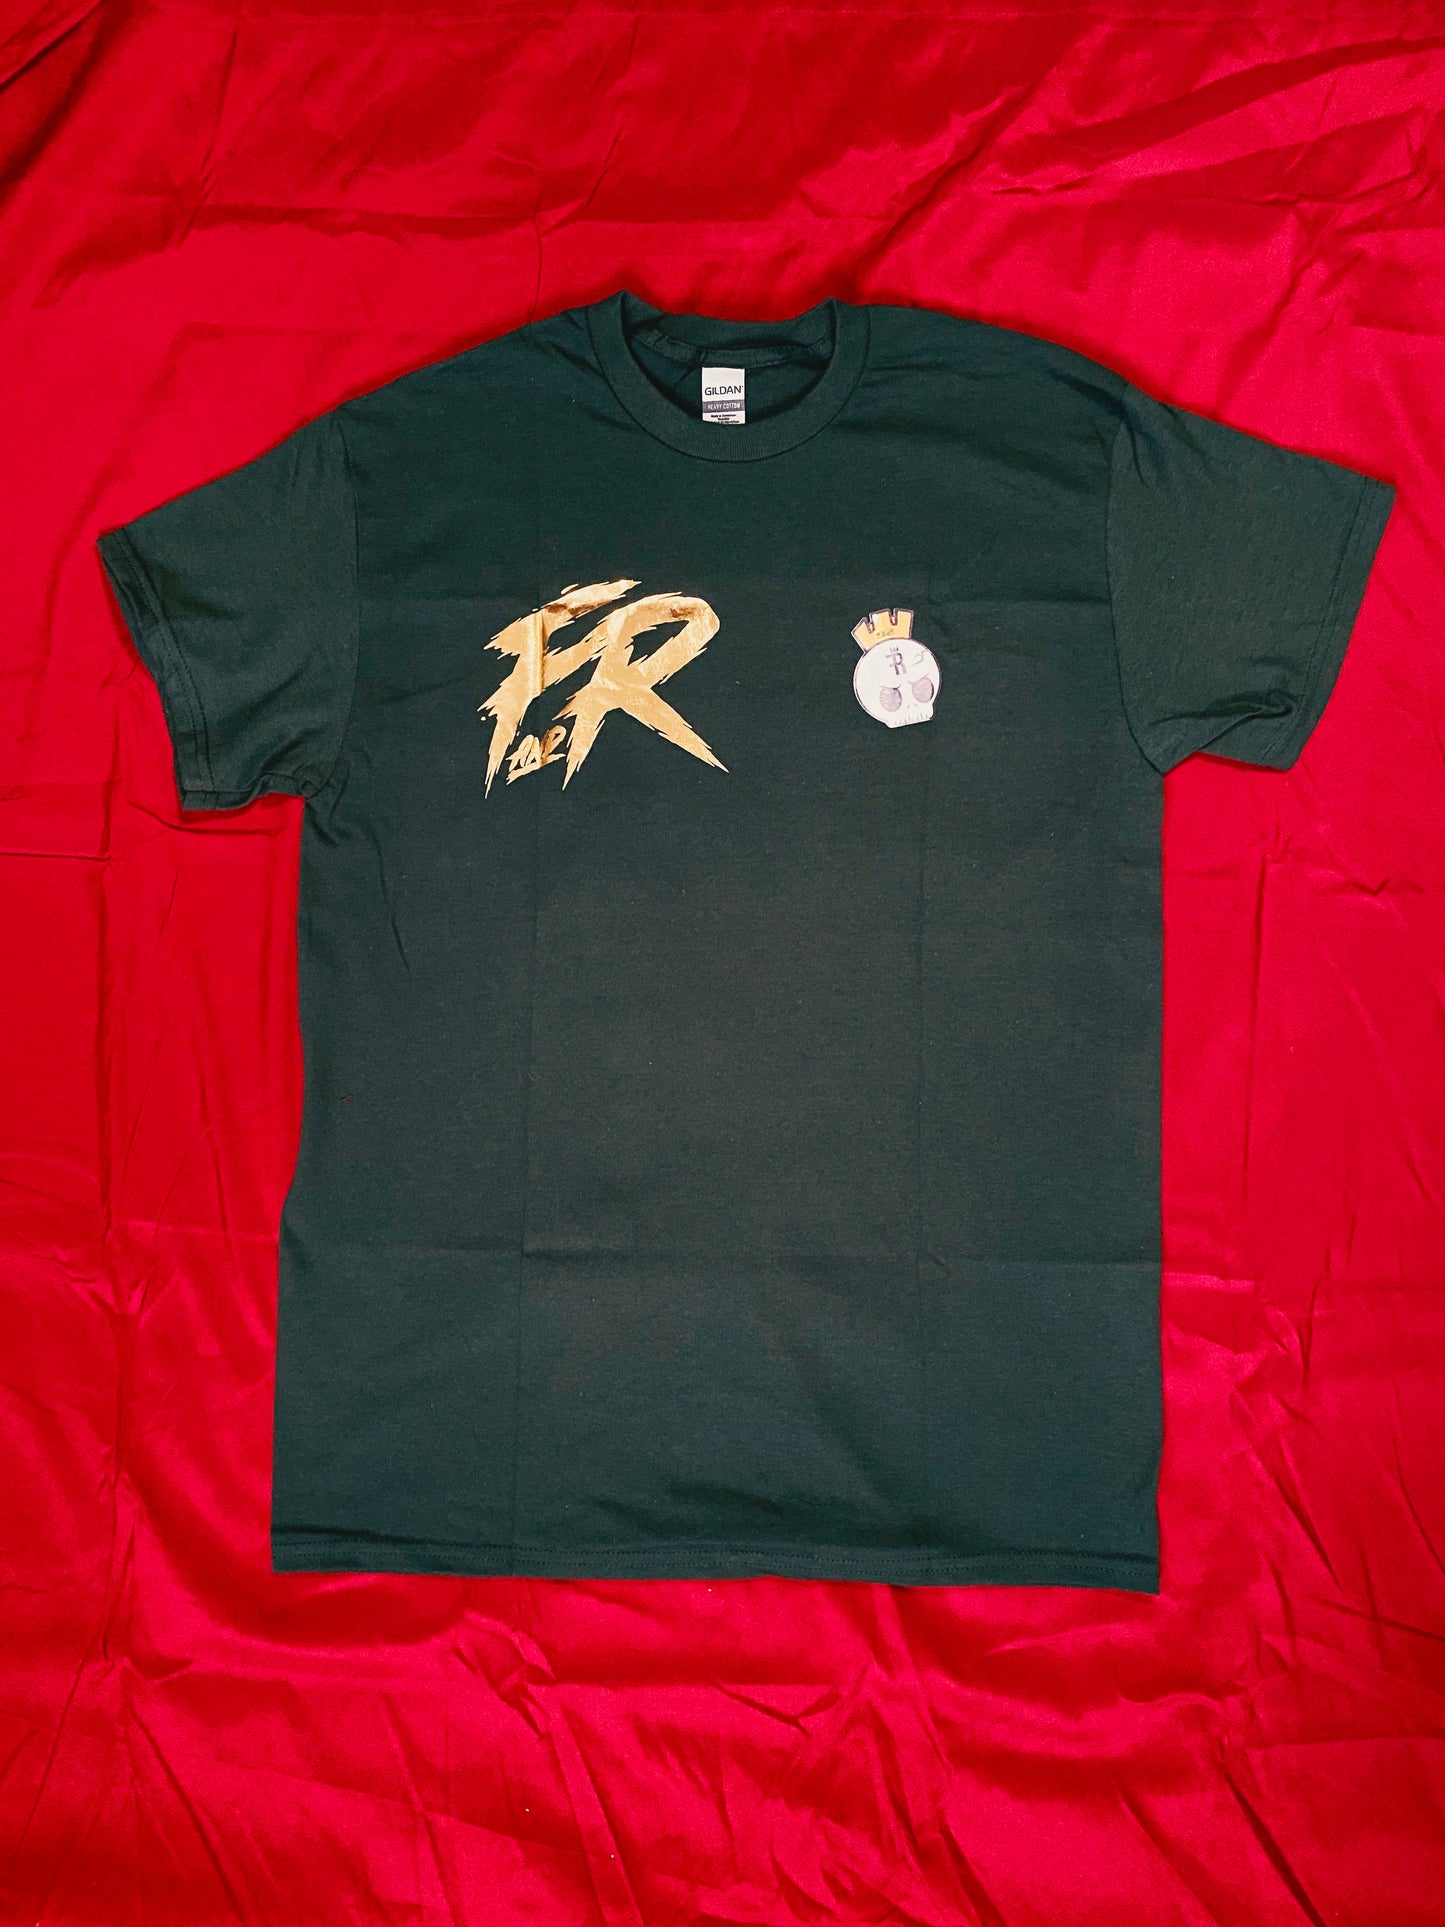 F&R 4Life T-Shirts